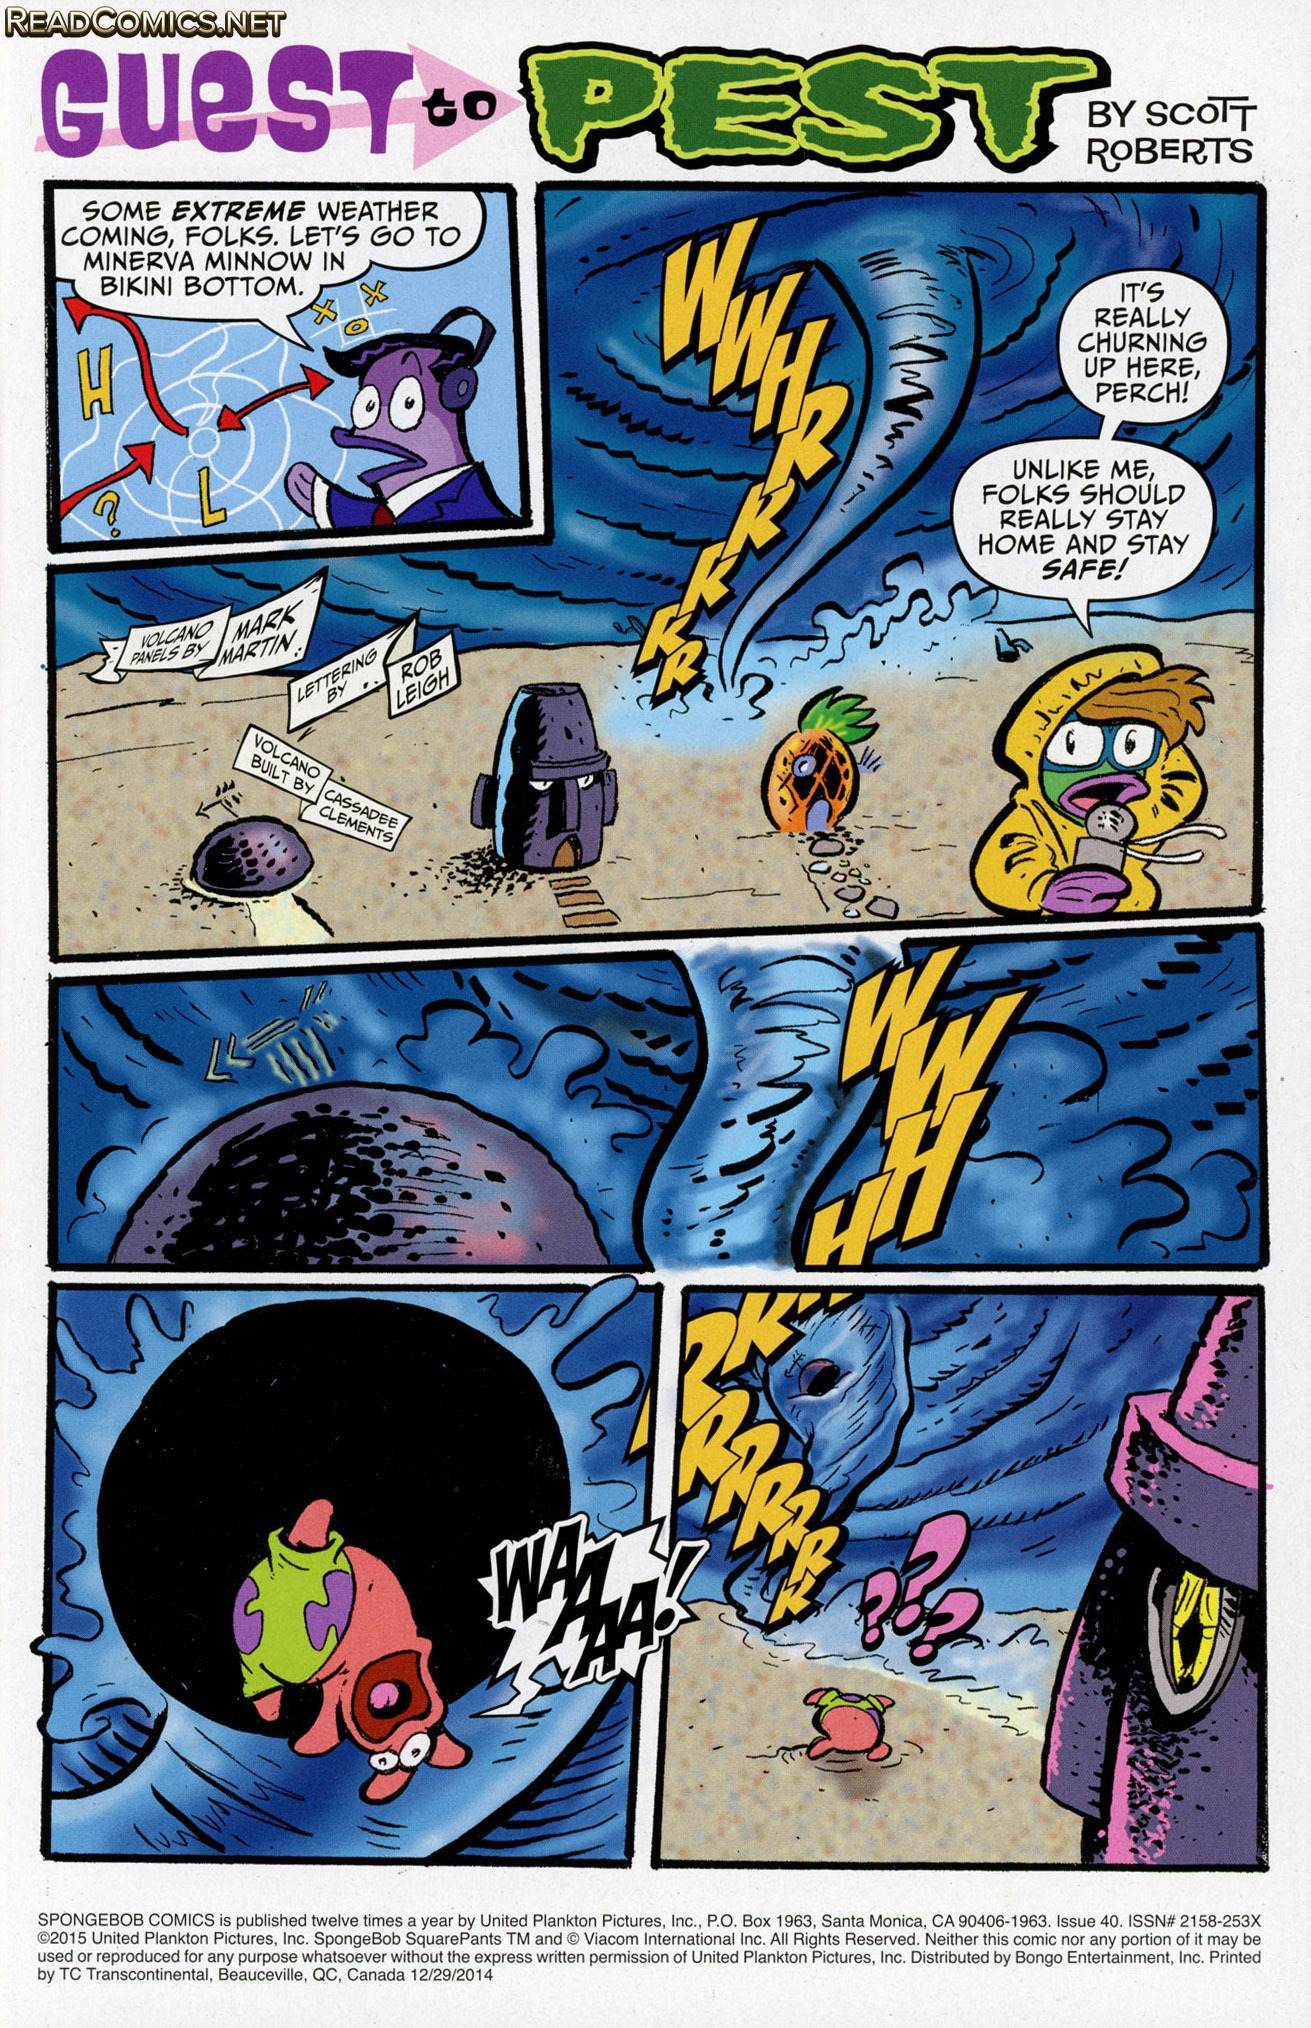 SpongeBob Comics (2011-): Chapter 40 - Page 3